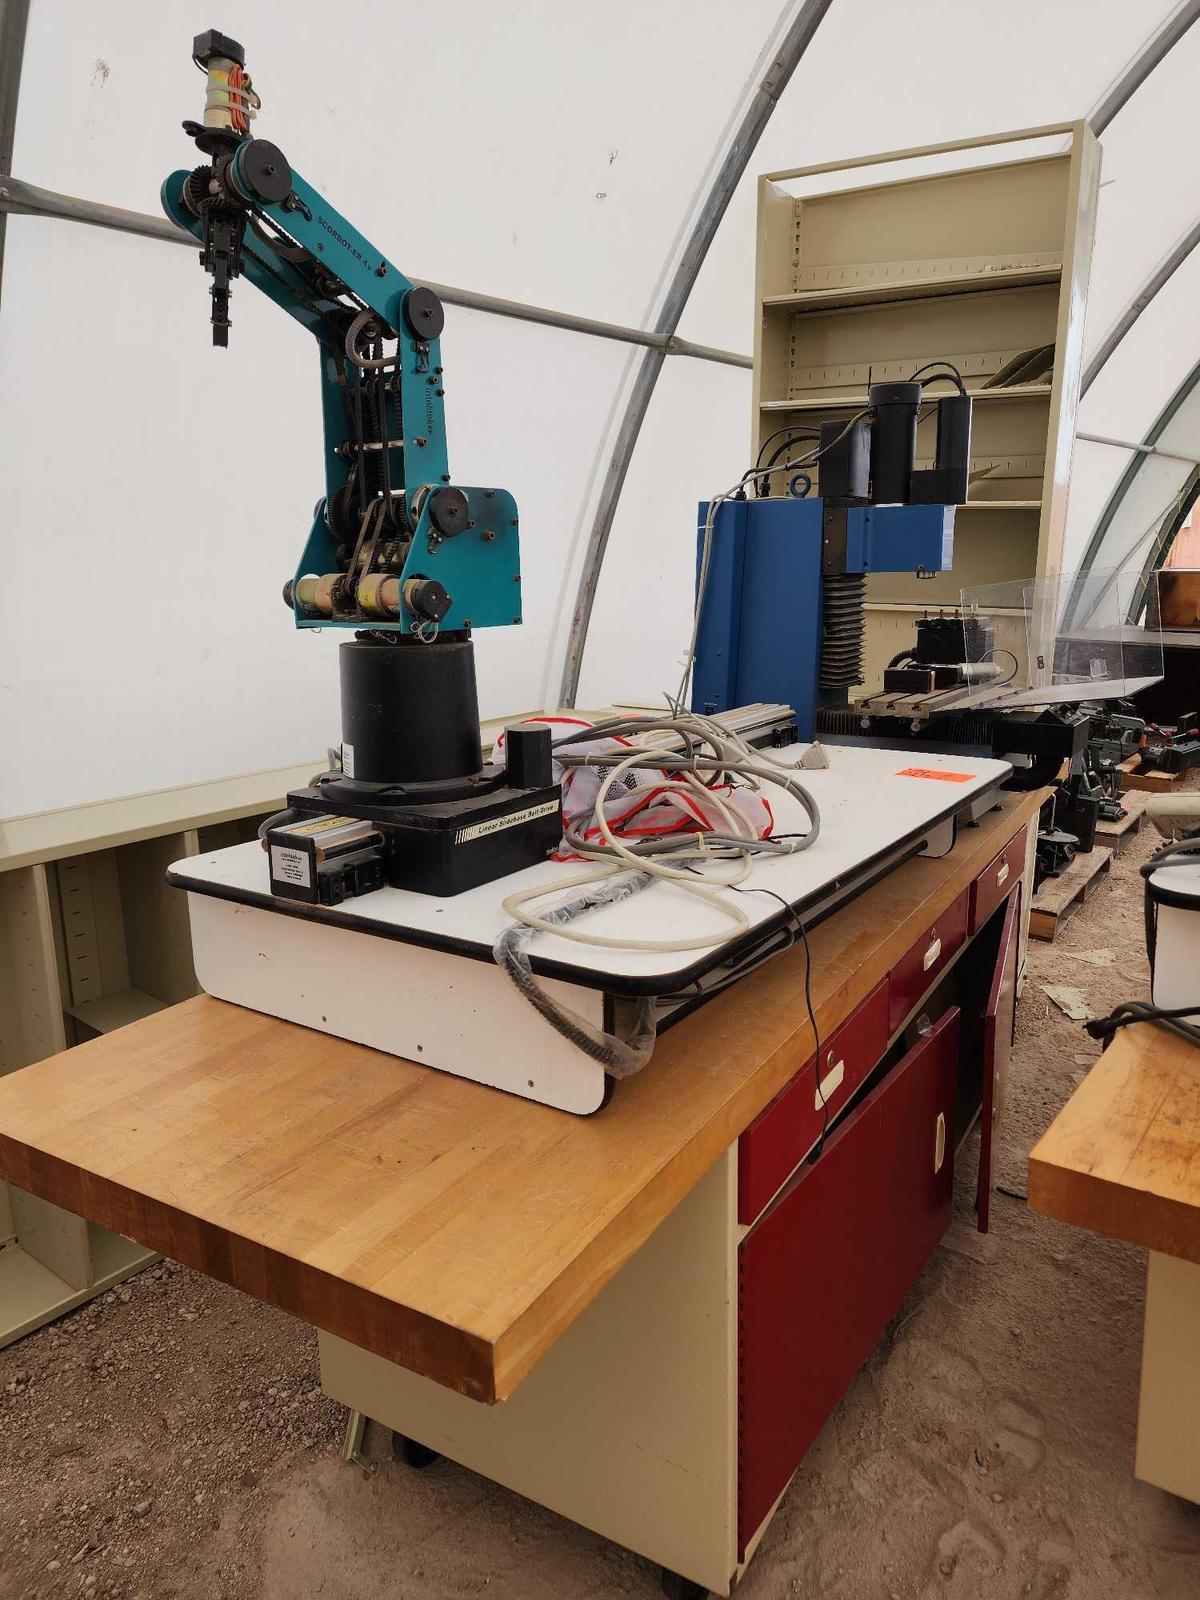 ProLight CNC Benchtop Machine, (2) Metal Book Shelves, Intelitek Scorbot-ER 4U Robot Arm, Plus